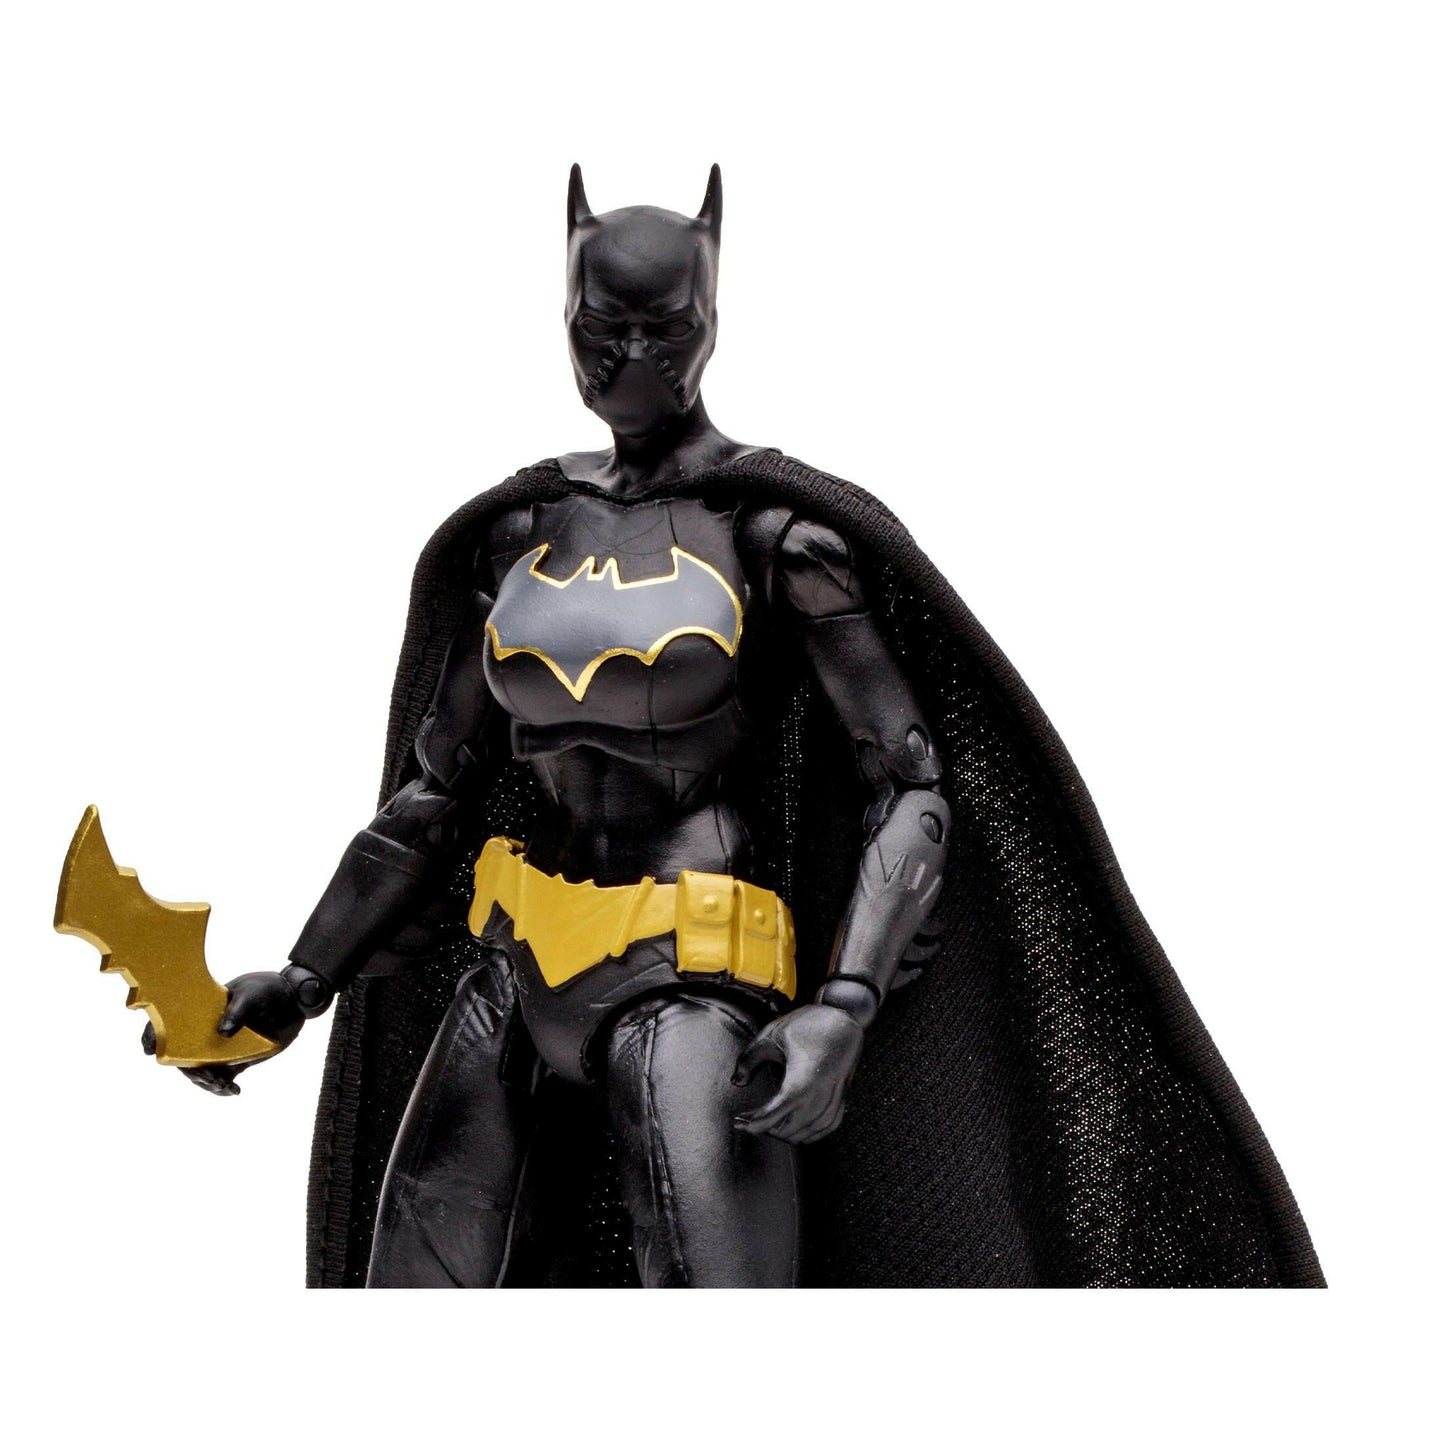 McFarlane DC Multiverse Batgirl Cassandra Cain (Gold Label) 18cm